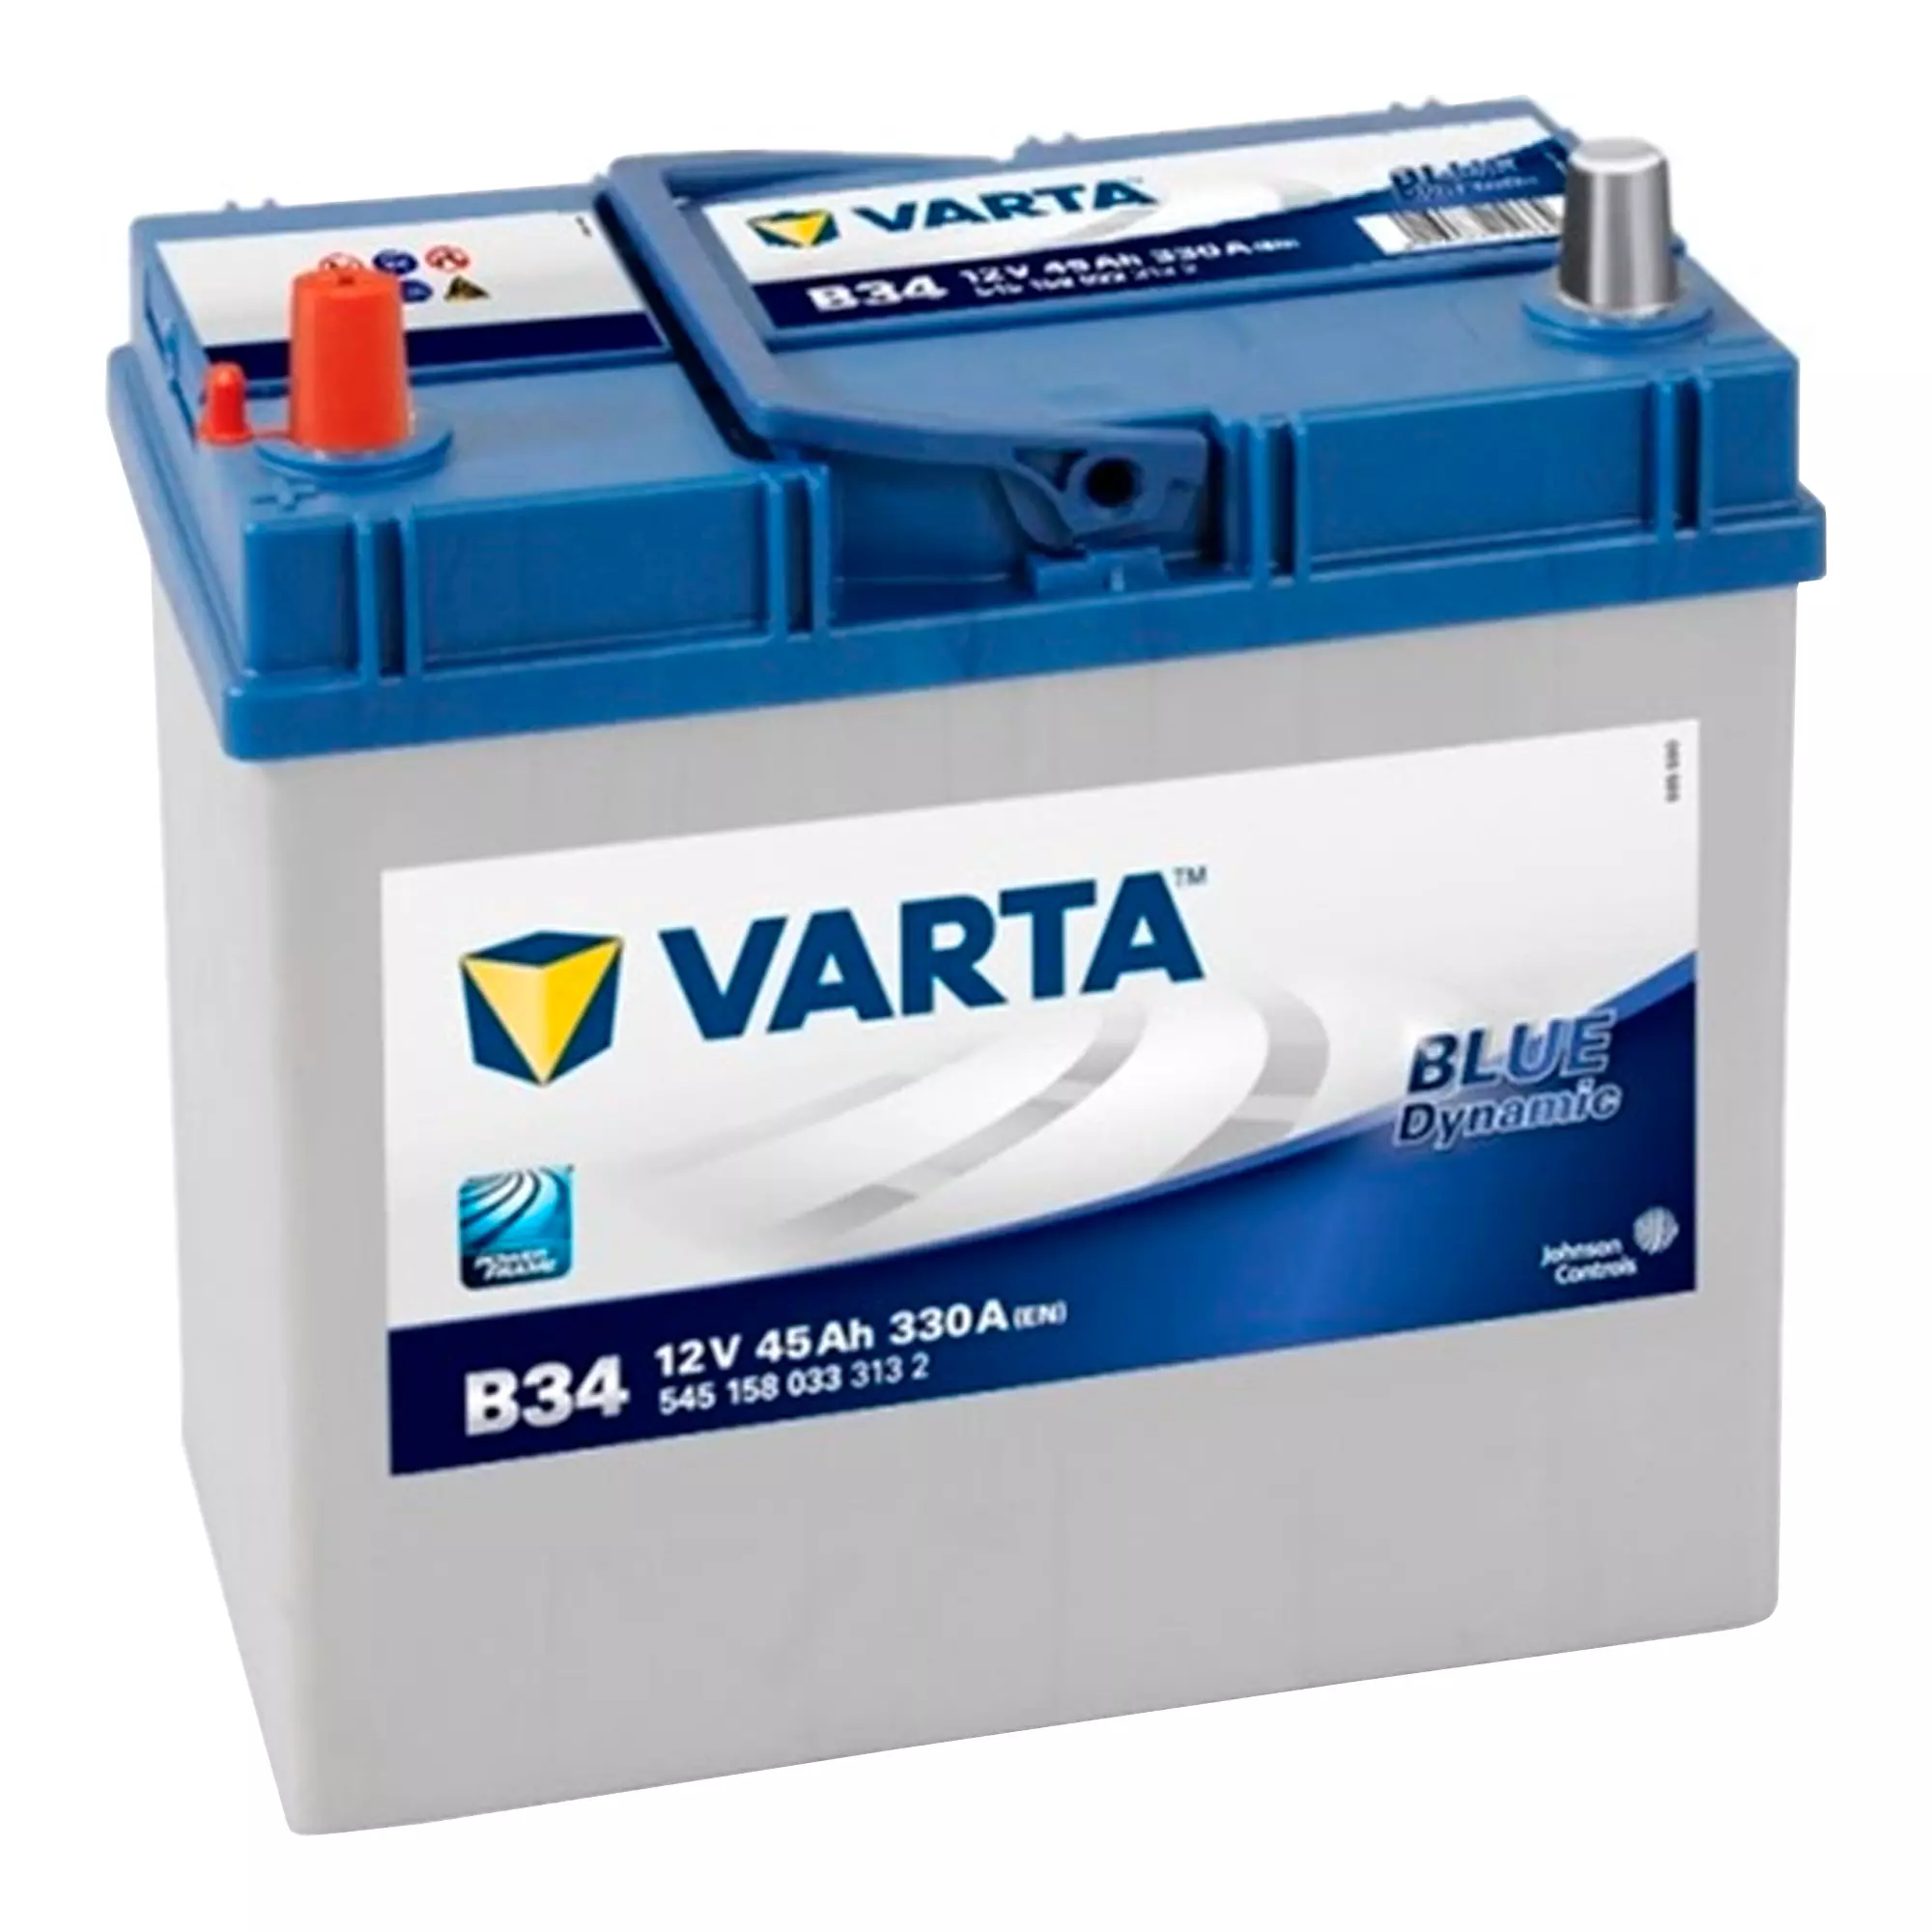 Автомобильный аккумулятор Varta Blue Dynamic B34 6CT-45Ah Аз Asia (545 158 033)